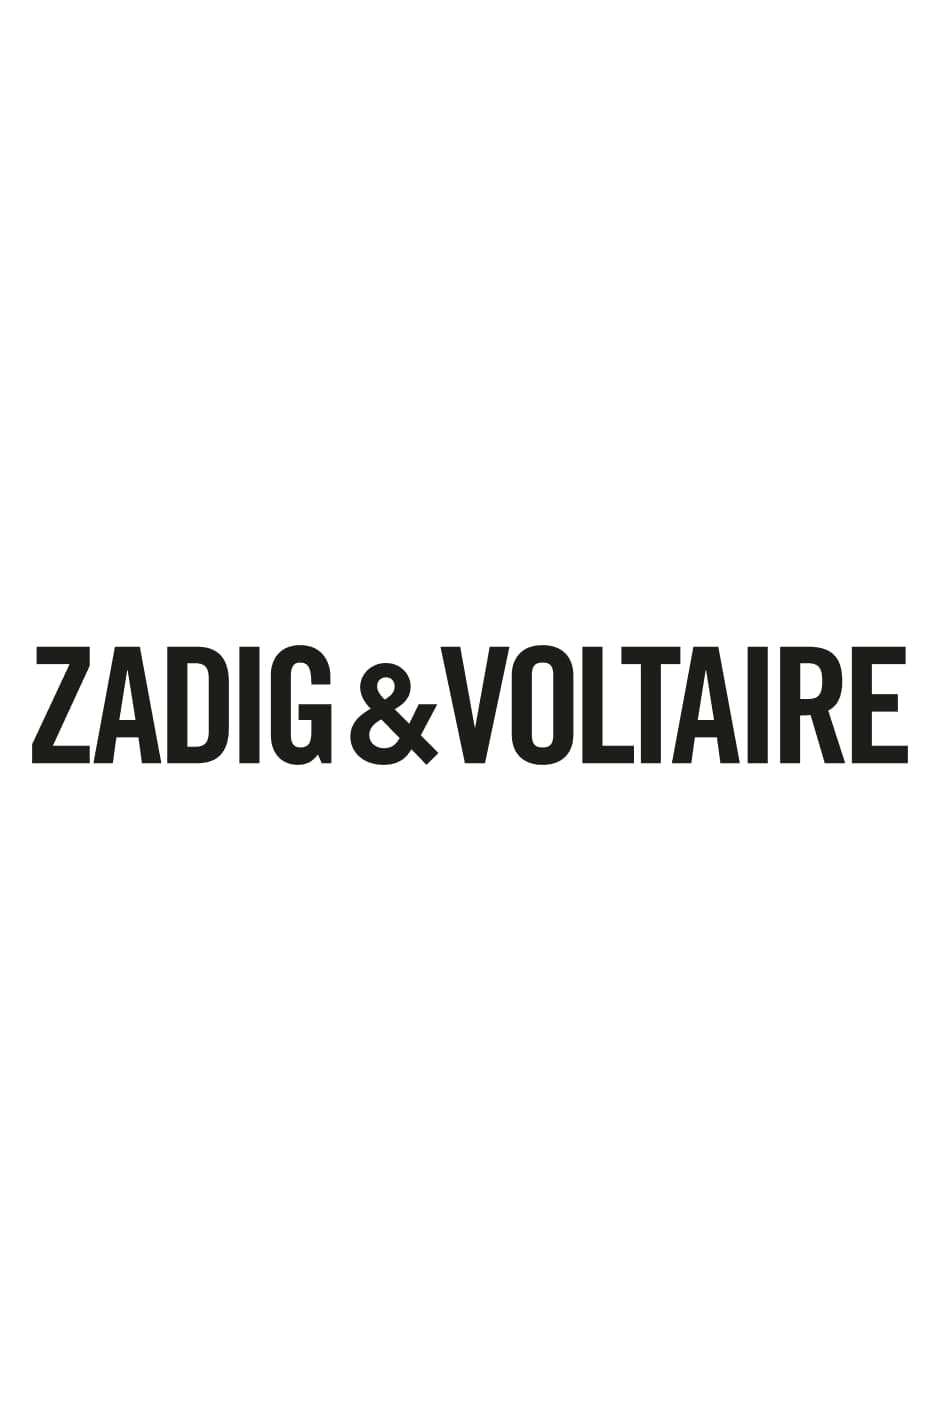 Spencer Diamanté Hoodie Women’s marl grey zip-up hoodie with Zadig&Voltaire manifesto tags print.